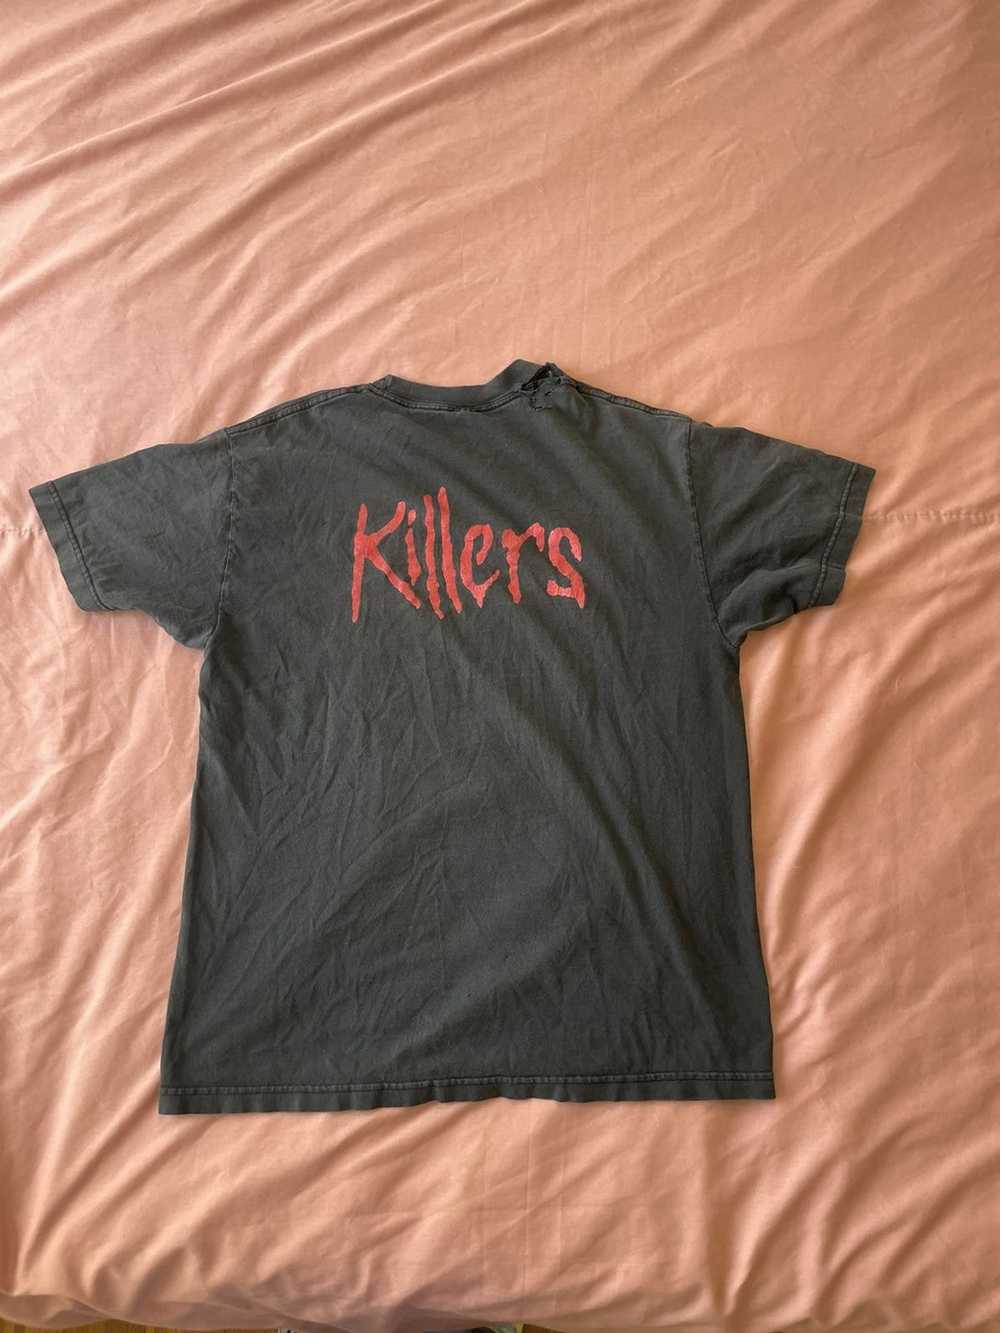 Vintage Vintage Iron Maiden Killers t shirt - image 2